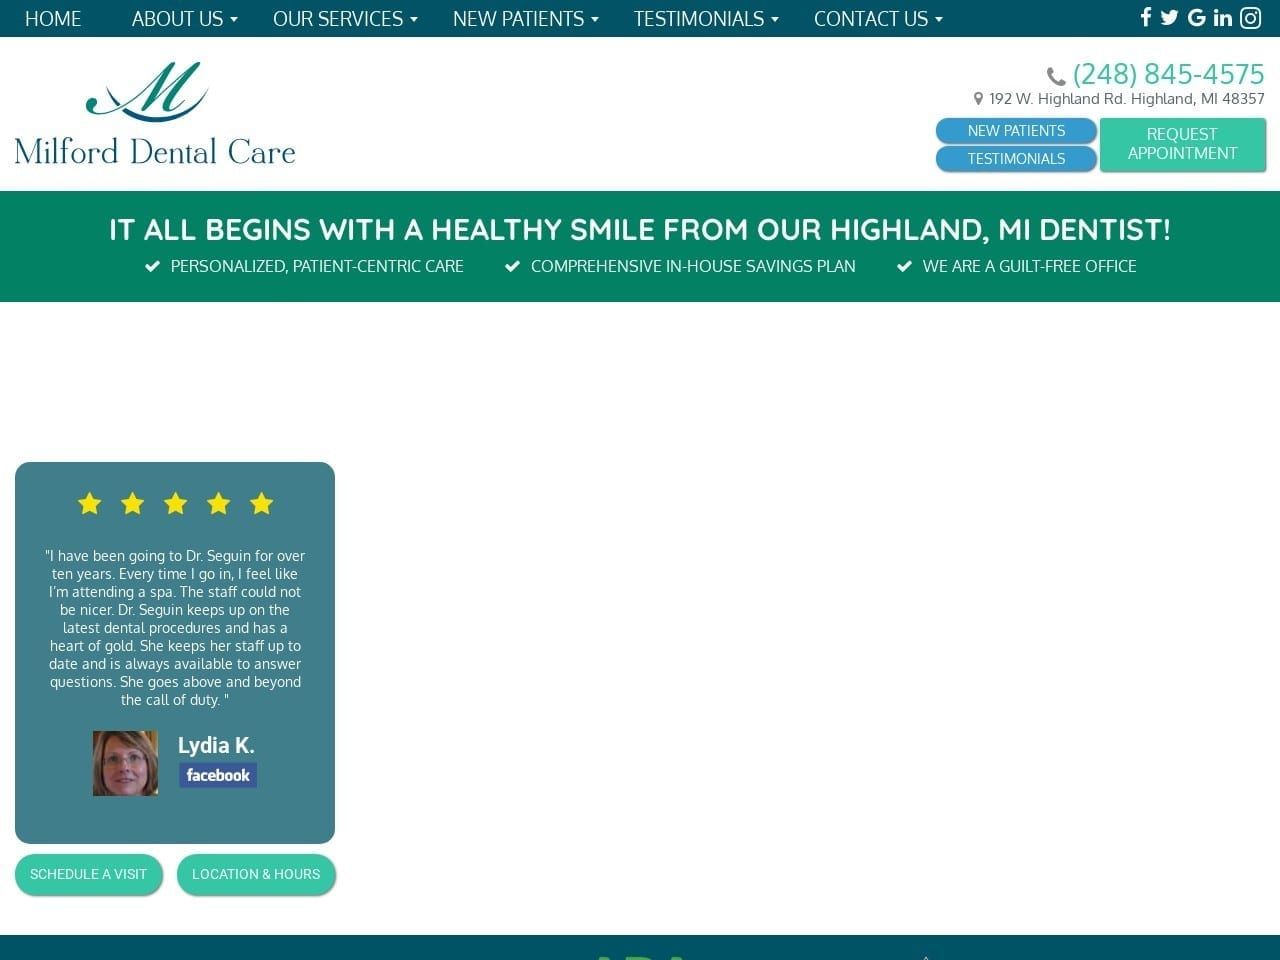 Milford Dental Care Seguin Jill DDS Website Screenshot from milforddentalcare.com